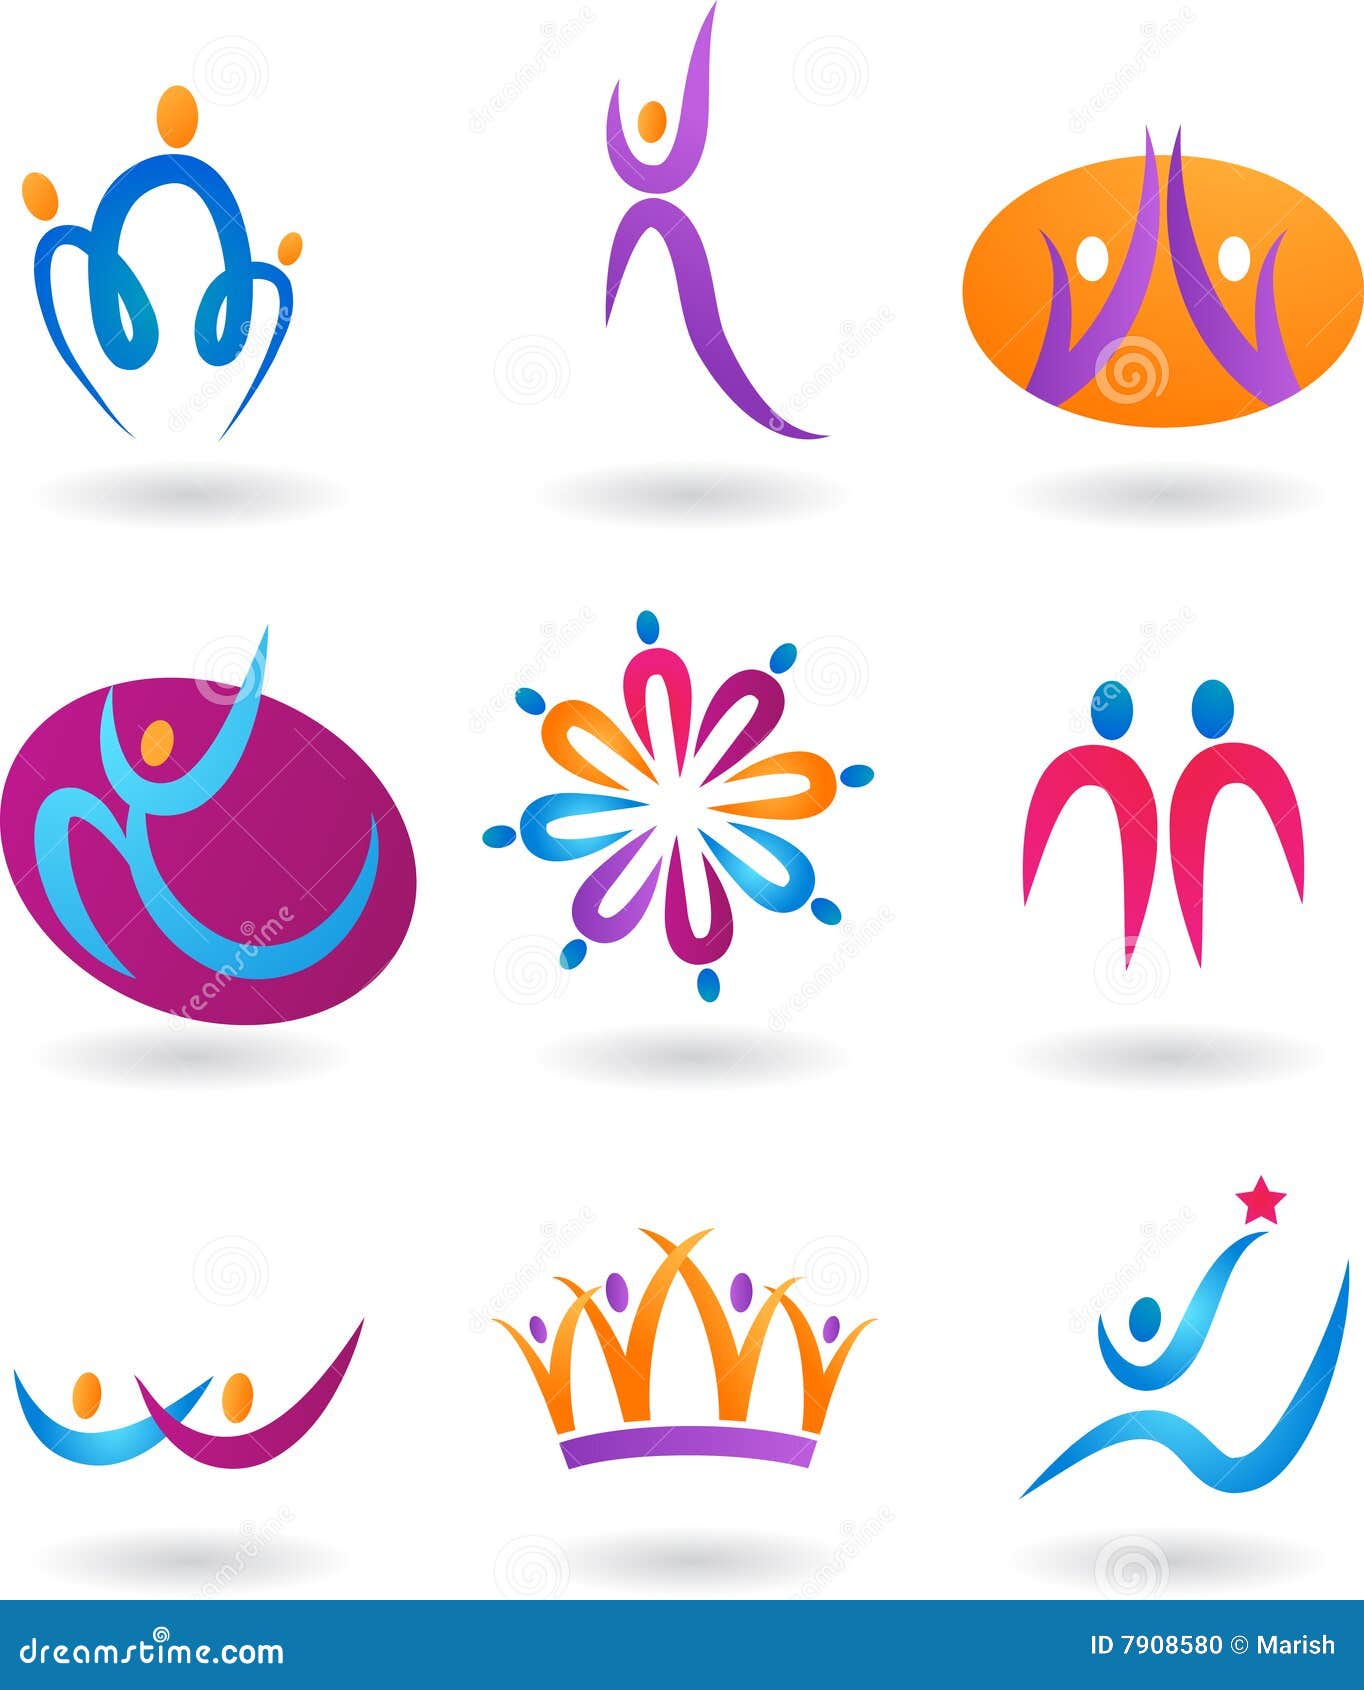 collection of human logos